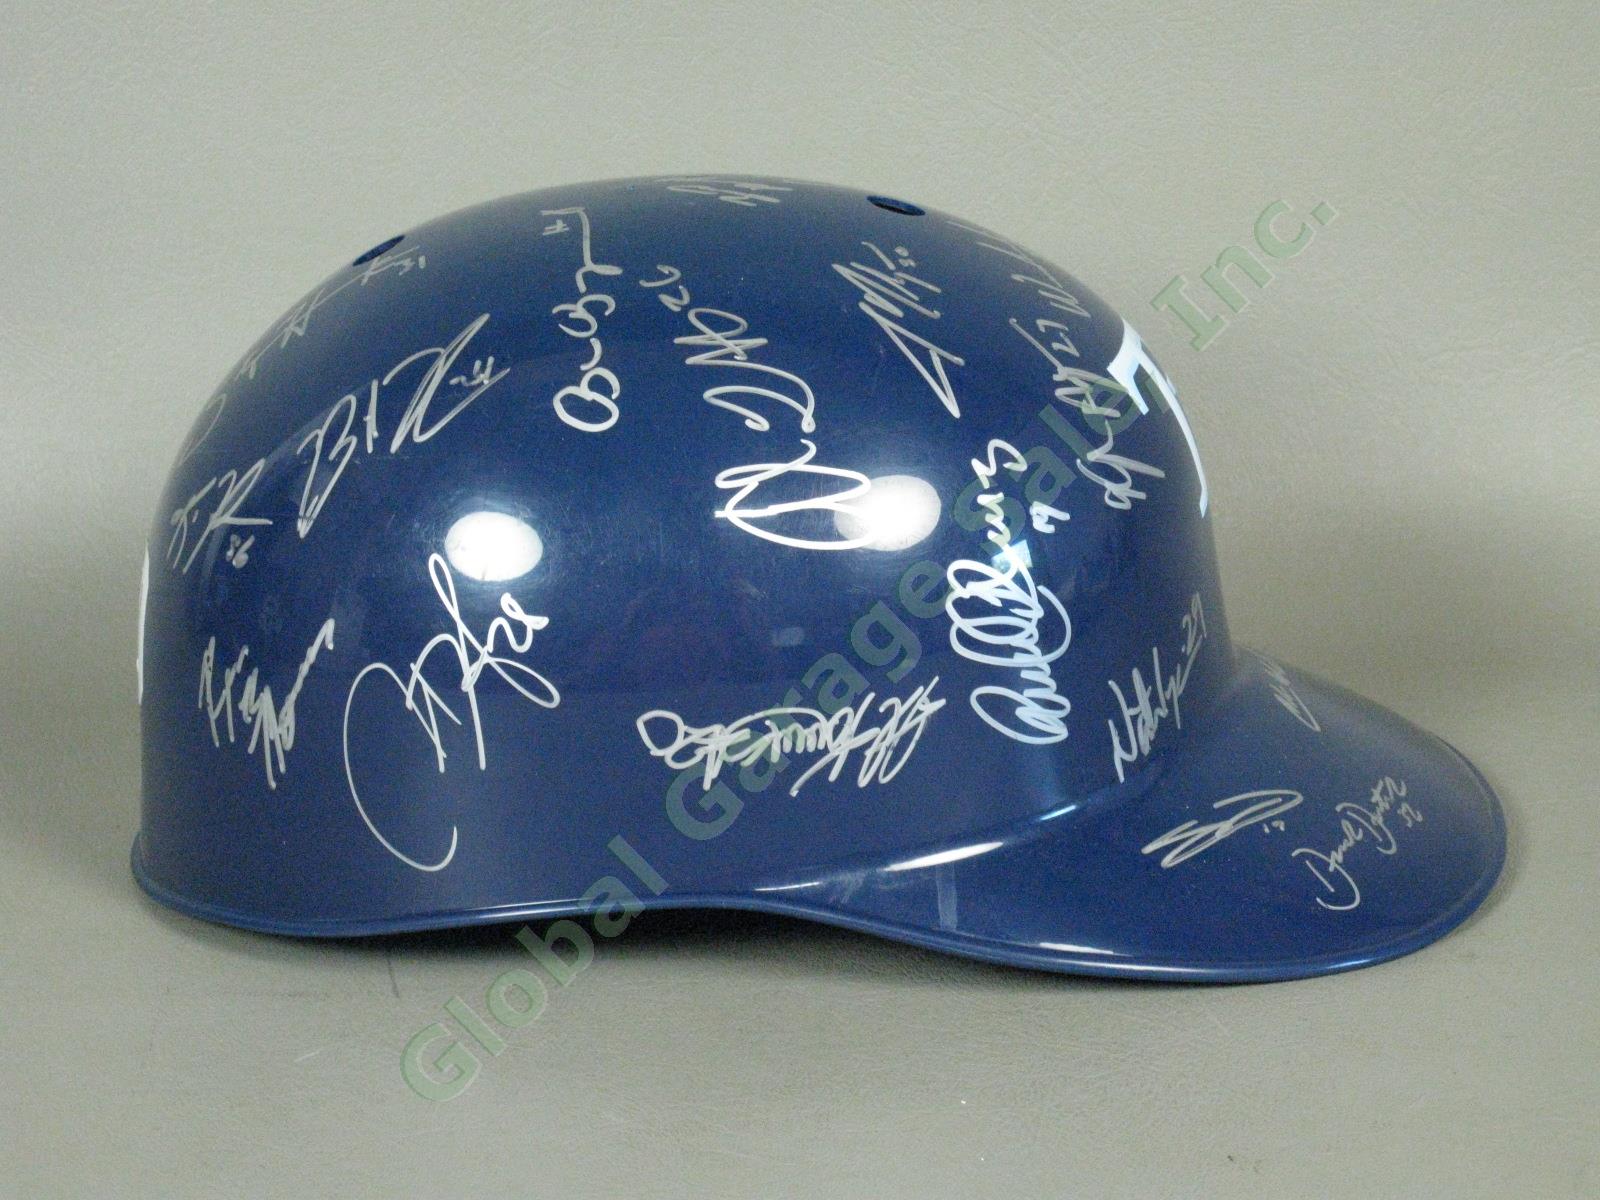 2010 Hudson Valley Renegades Team Signed Baseball Helmet NYPL Tampa Bay Rays NR 1